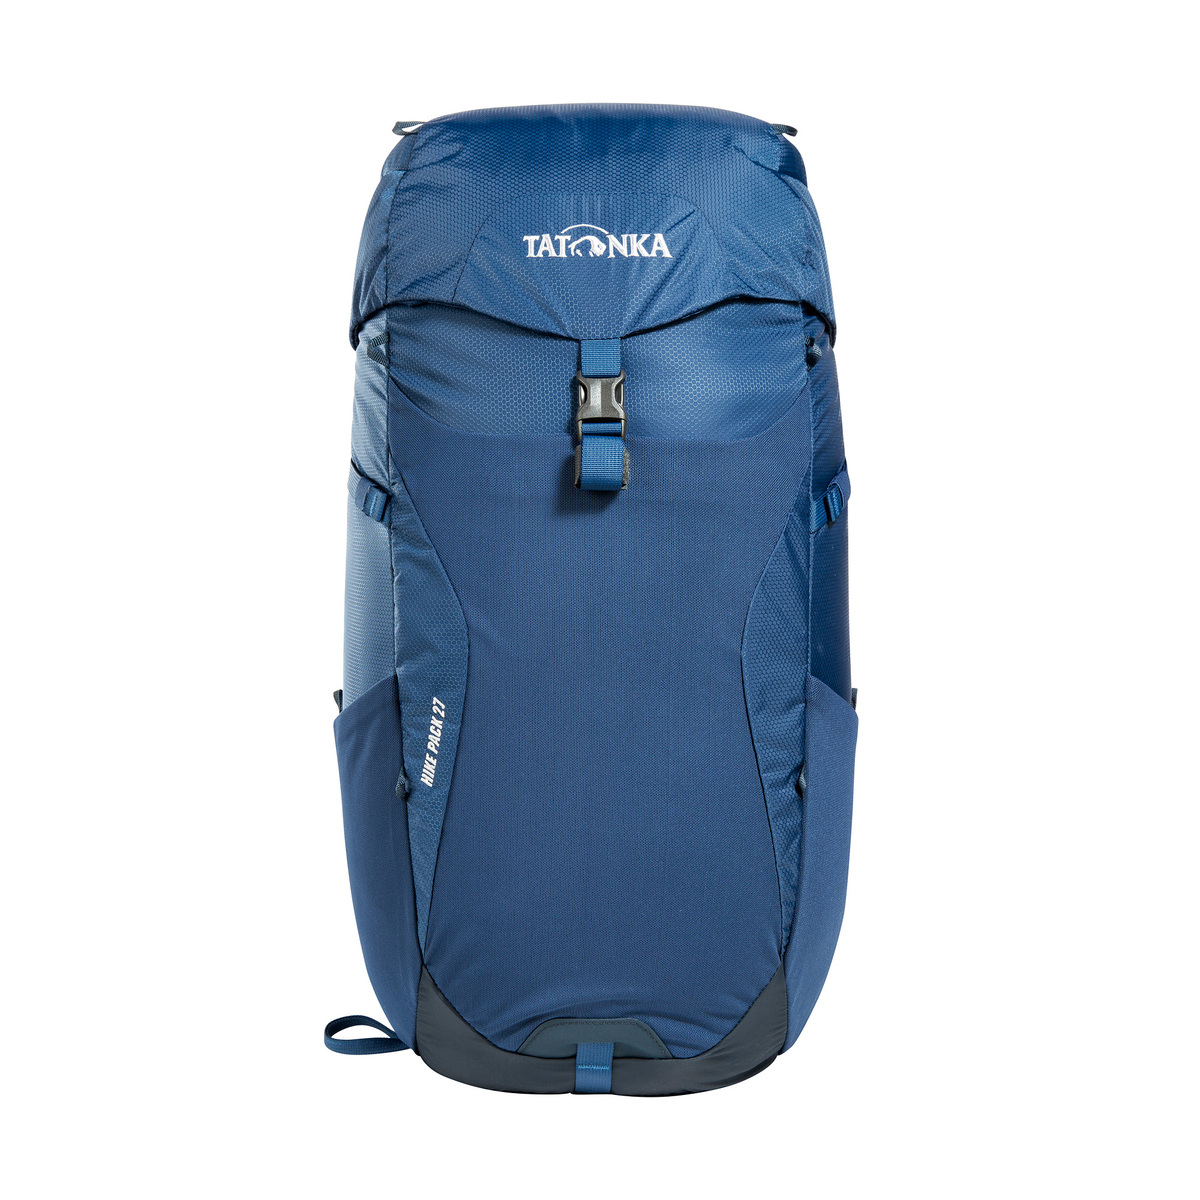 Tatonka "Hike Pack 27" - darker blue